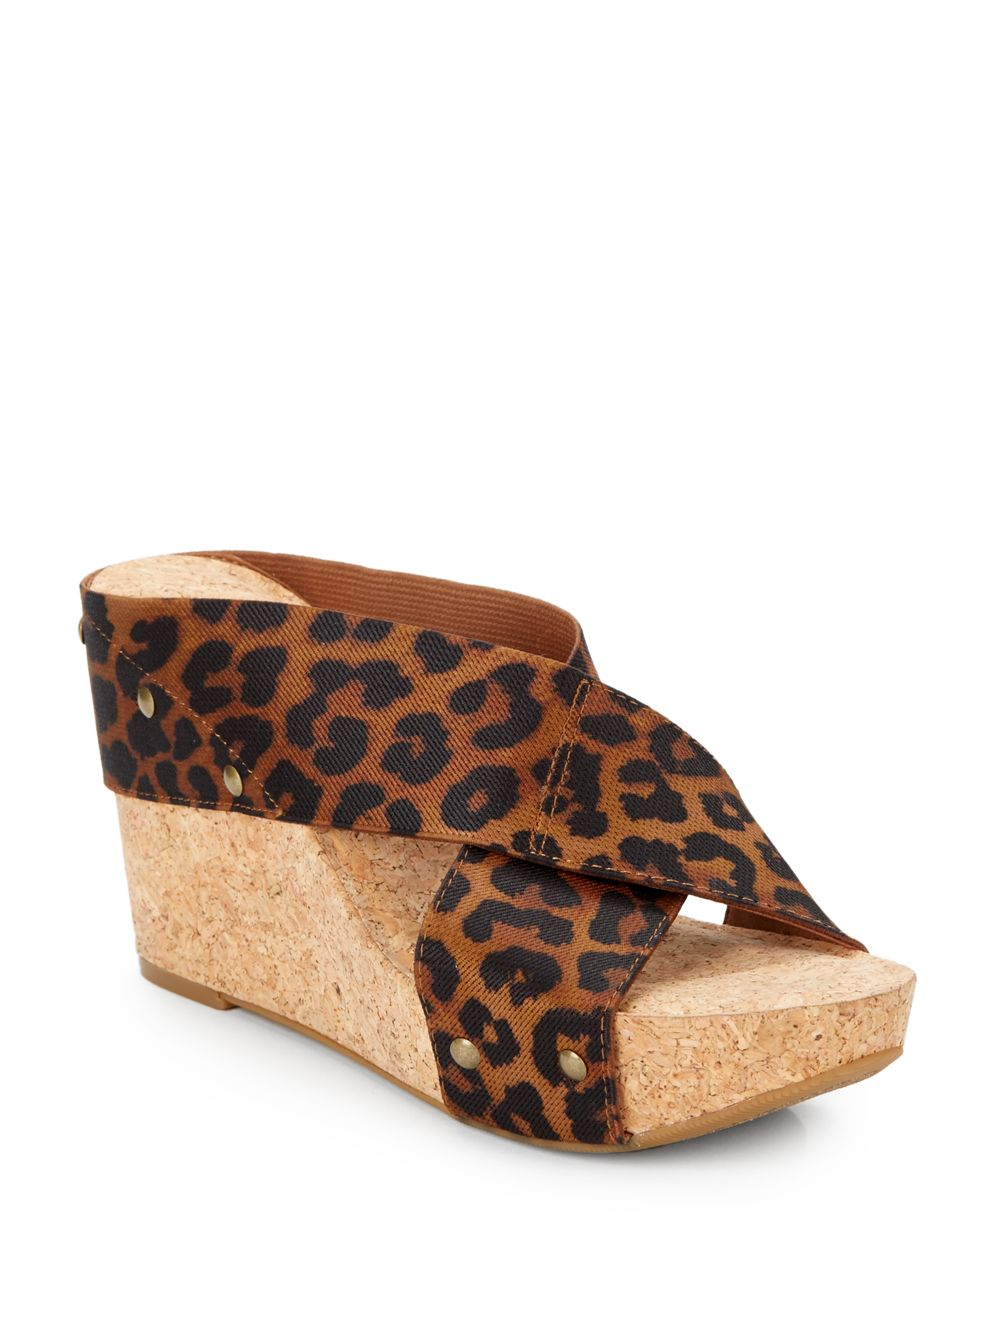 Animal Miller 2 Leopard-Print Crisscross Wedge Sandals